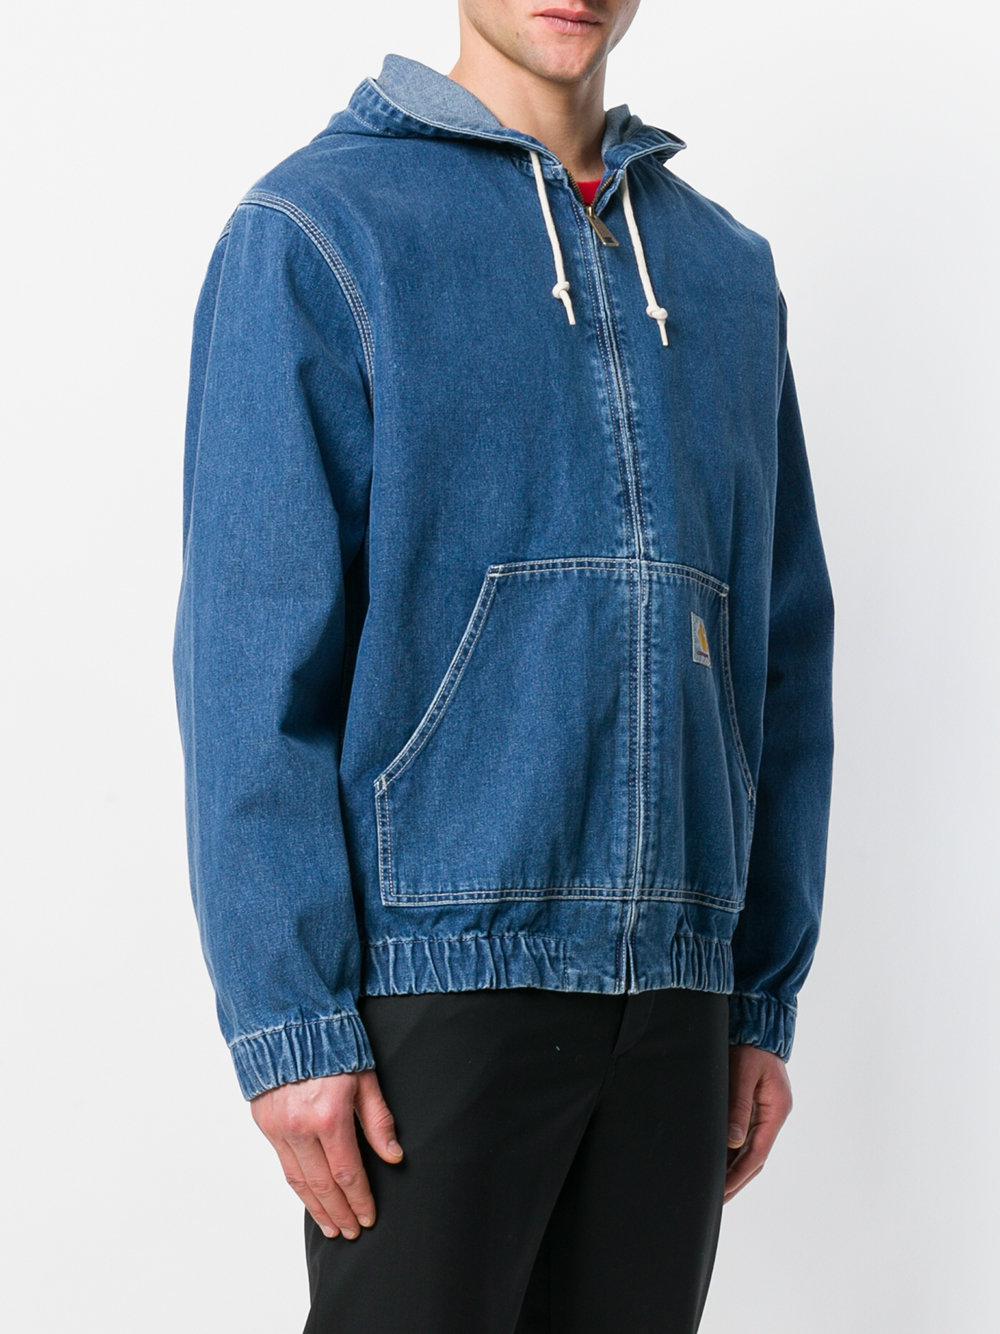 Carhartt Hooded Denim Jacket in Blue for Men - Lyst